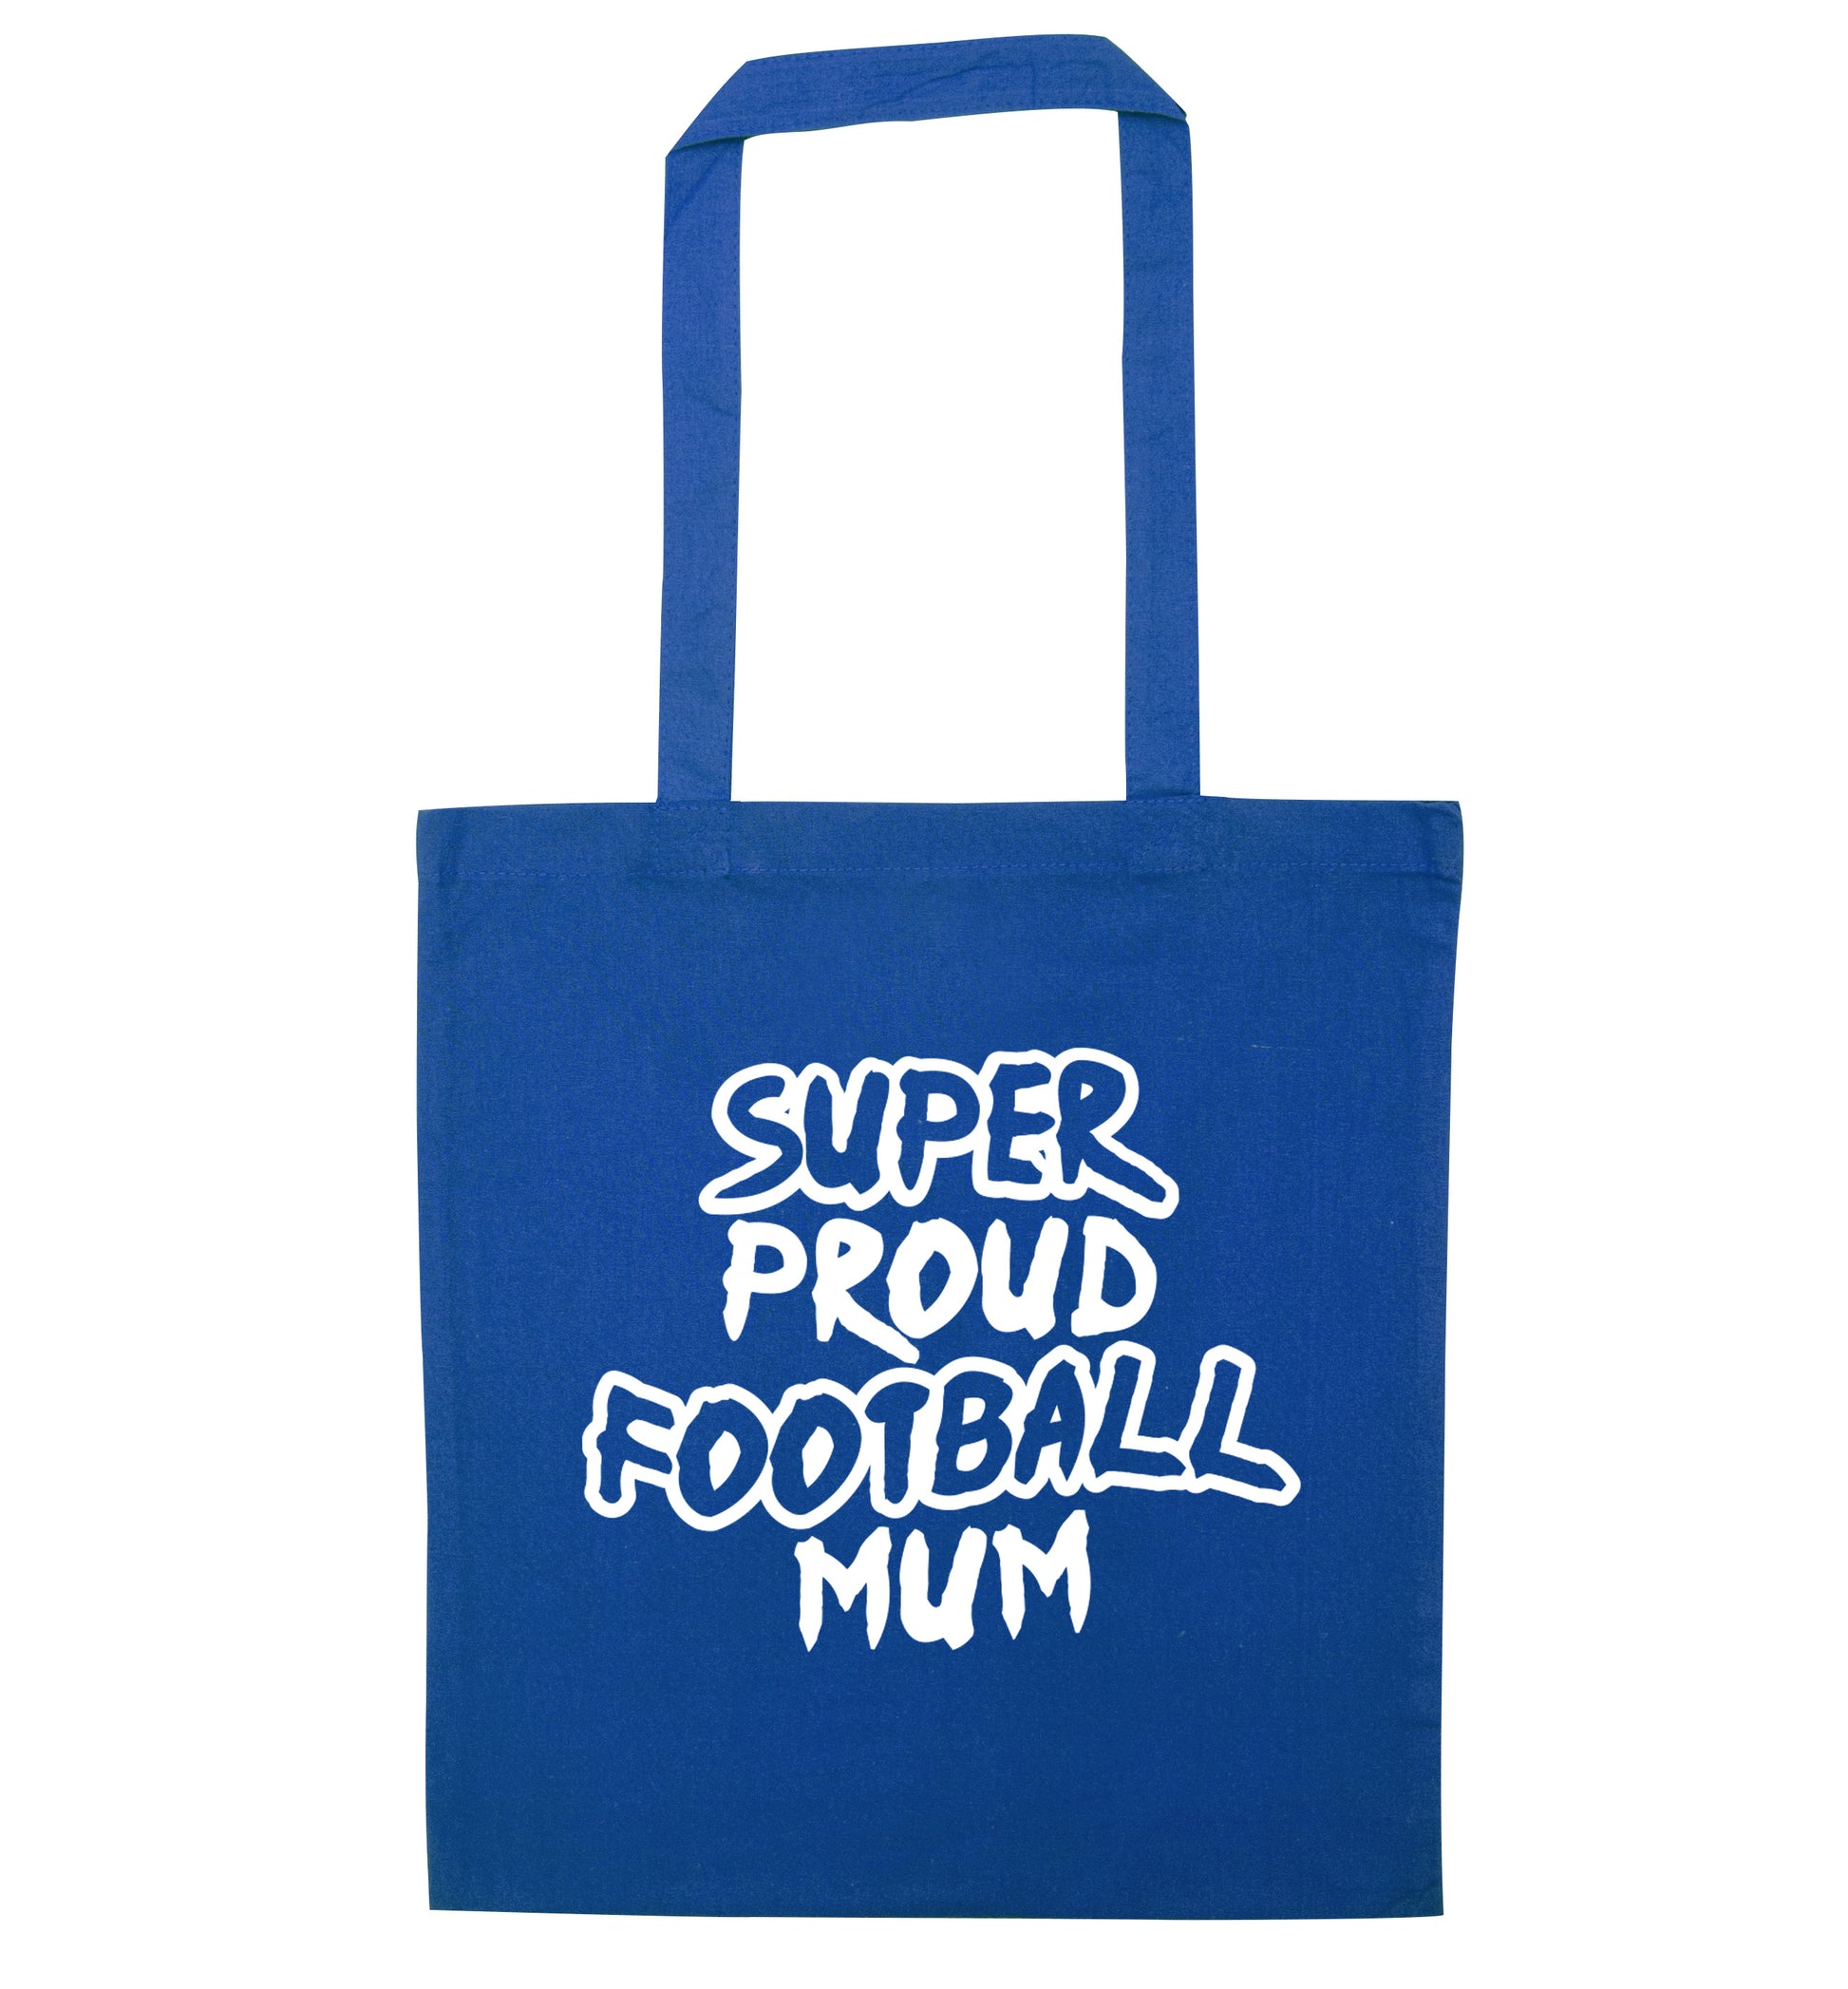 Super proud football mum blue tote bag